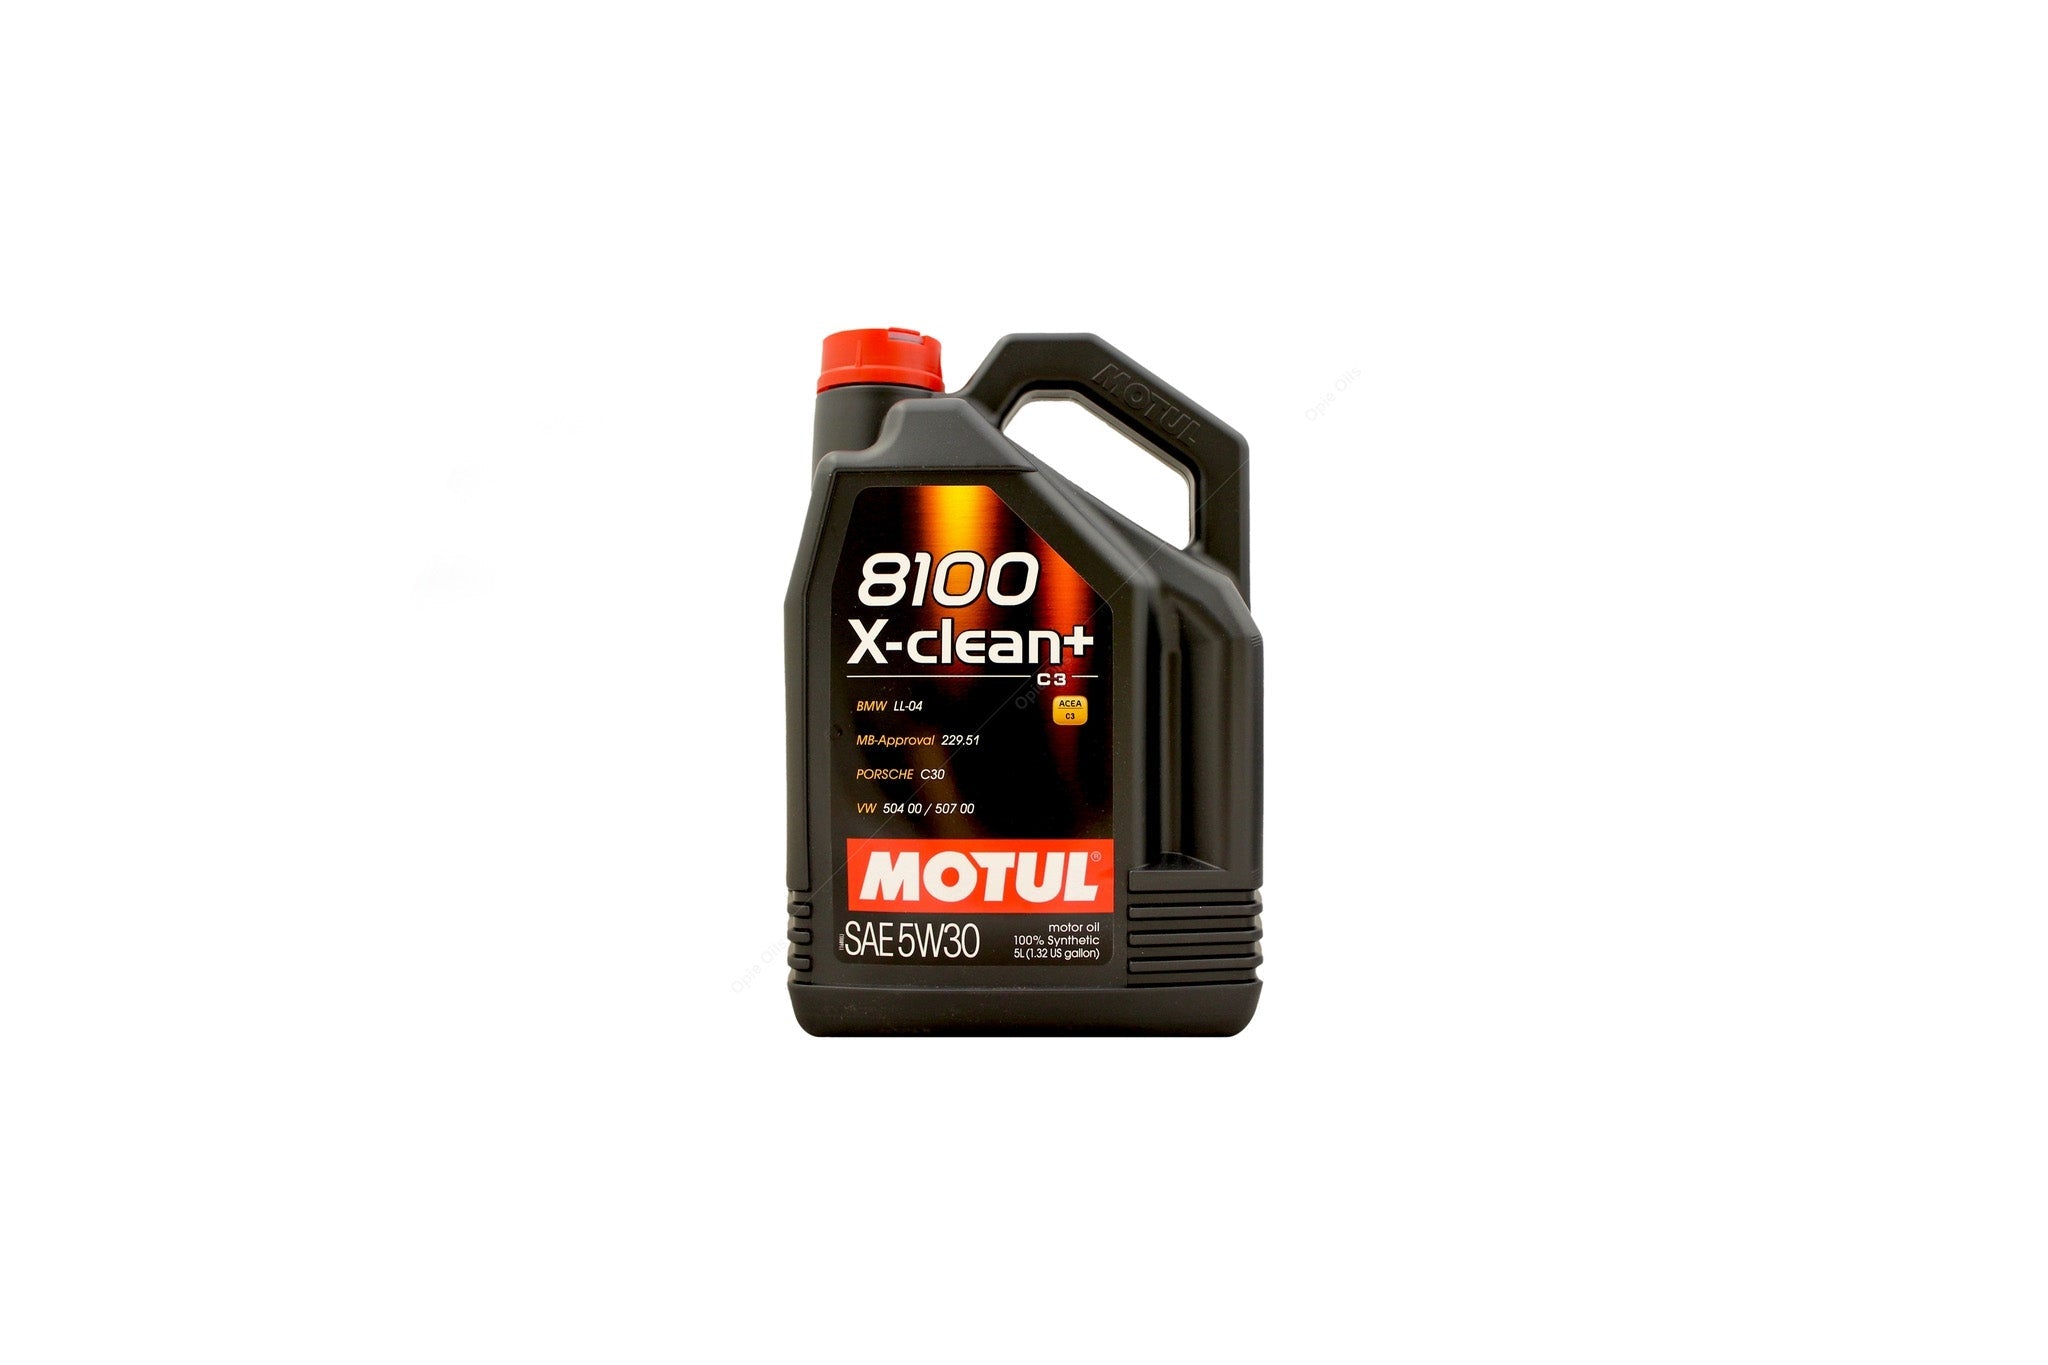 Motul 8100 X-Clean+ 5w30 Fully Synthetic Car Engine Oil - Evolve Automotive